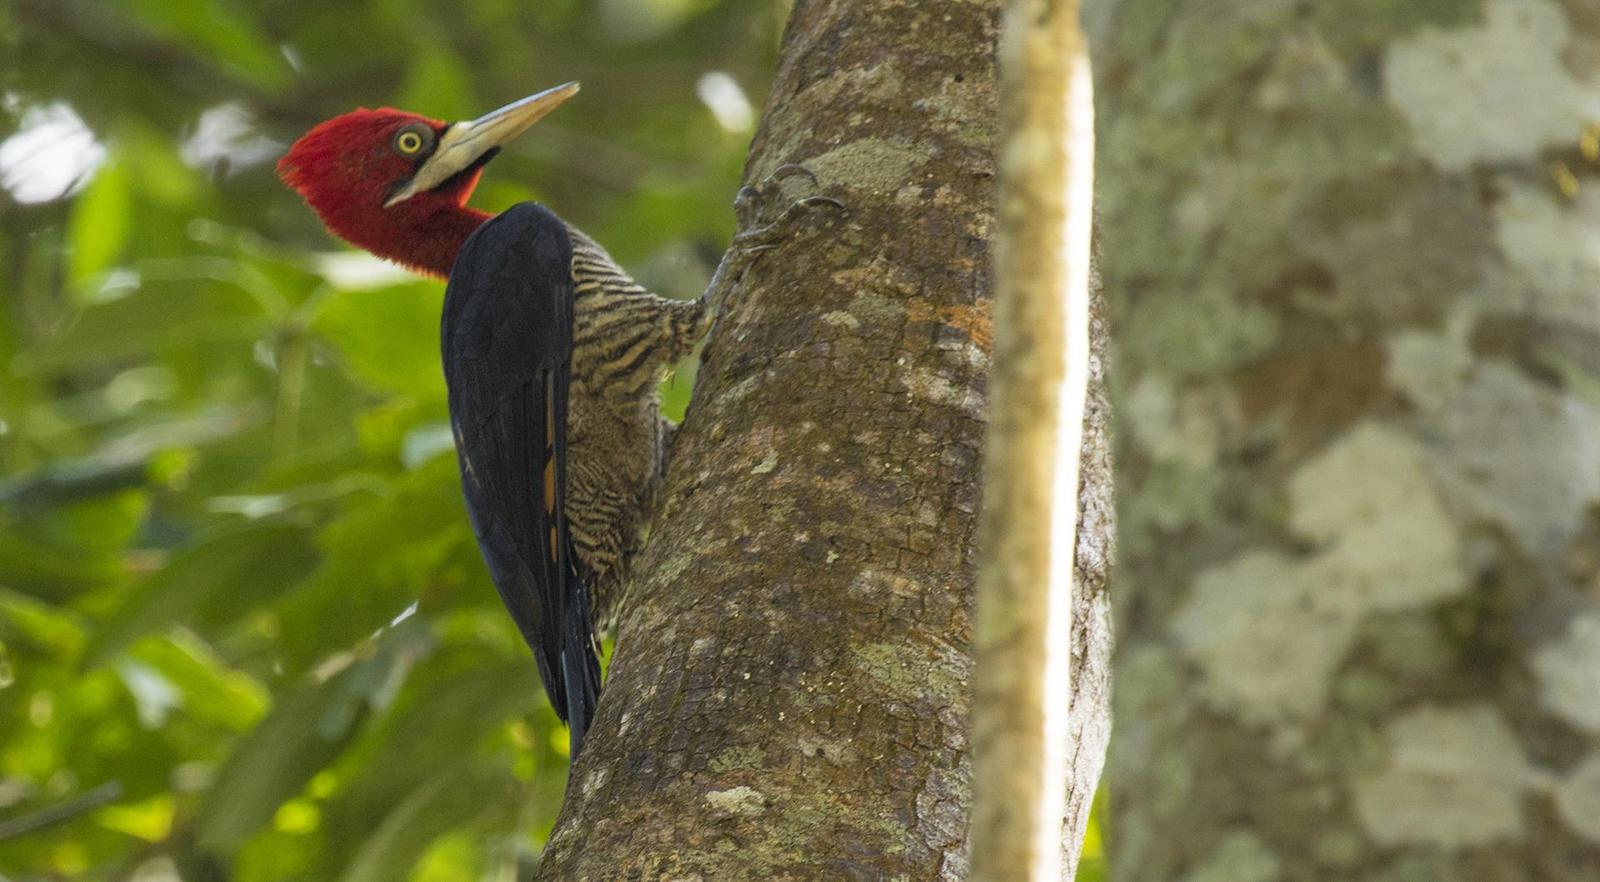 Robust Woodpecker Photo by José mauro Costa monteiro